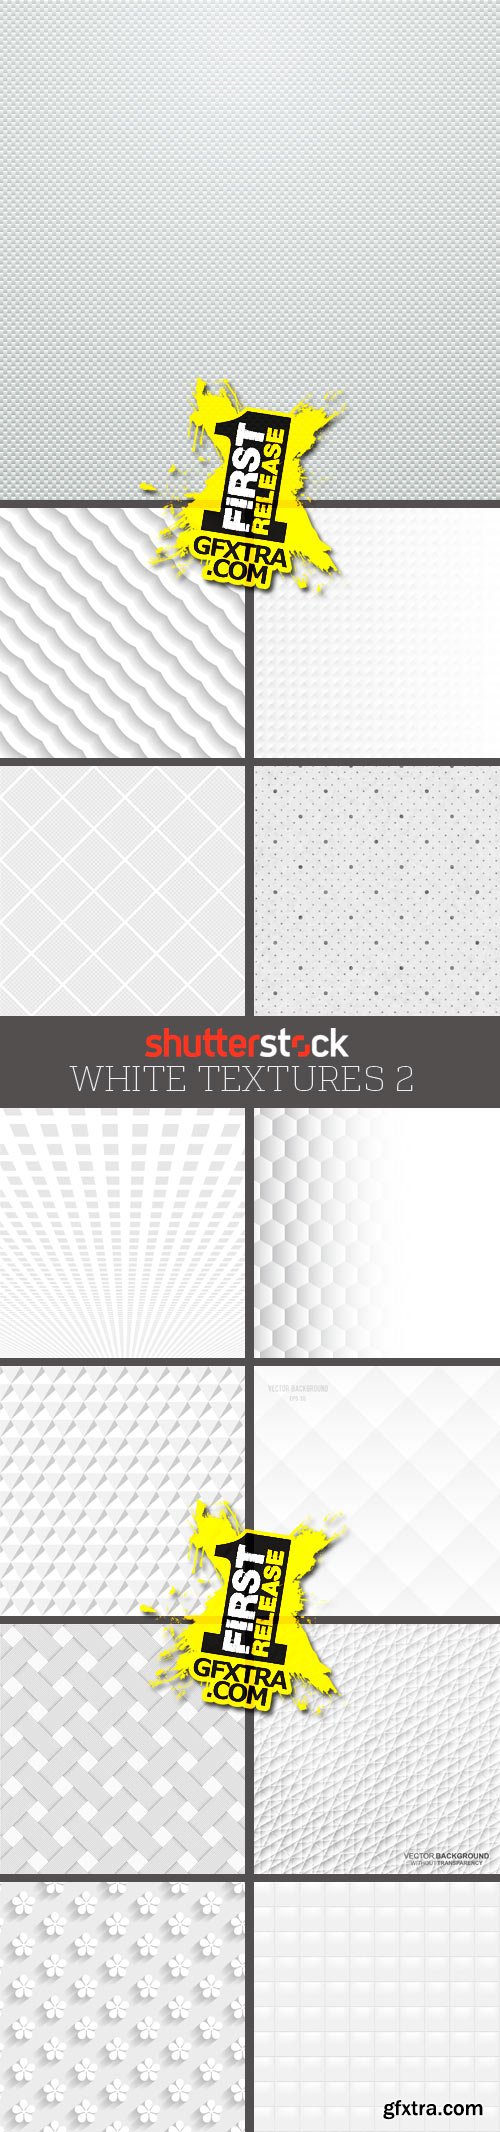 Amazing SS - White Textures 2, 25xEPS